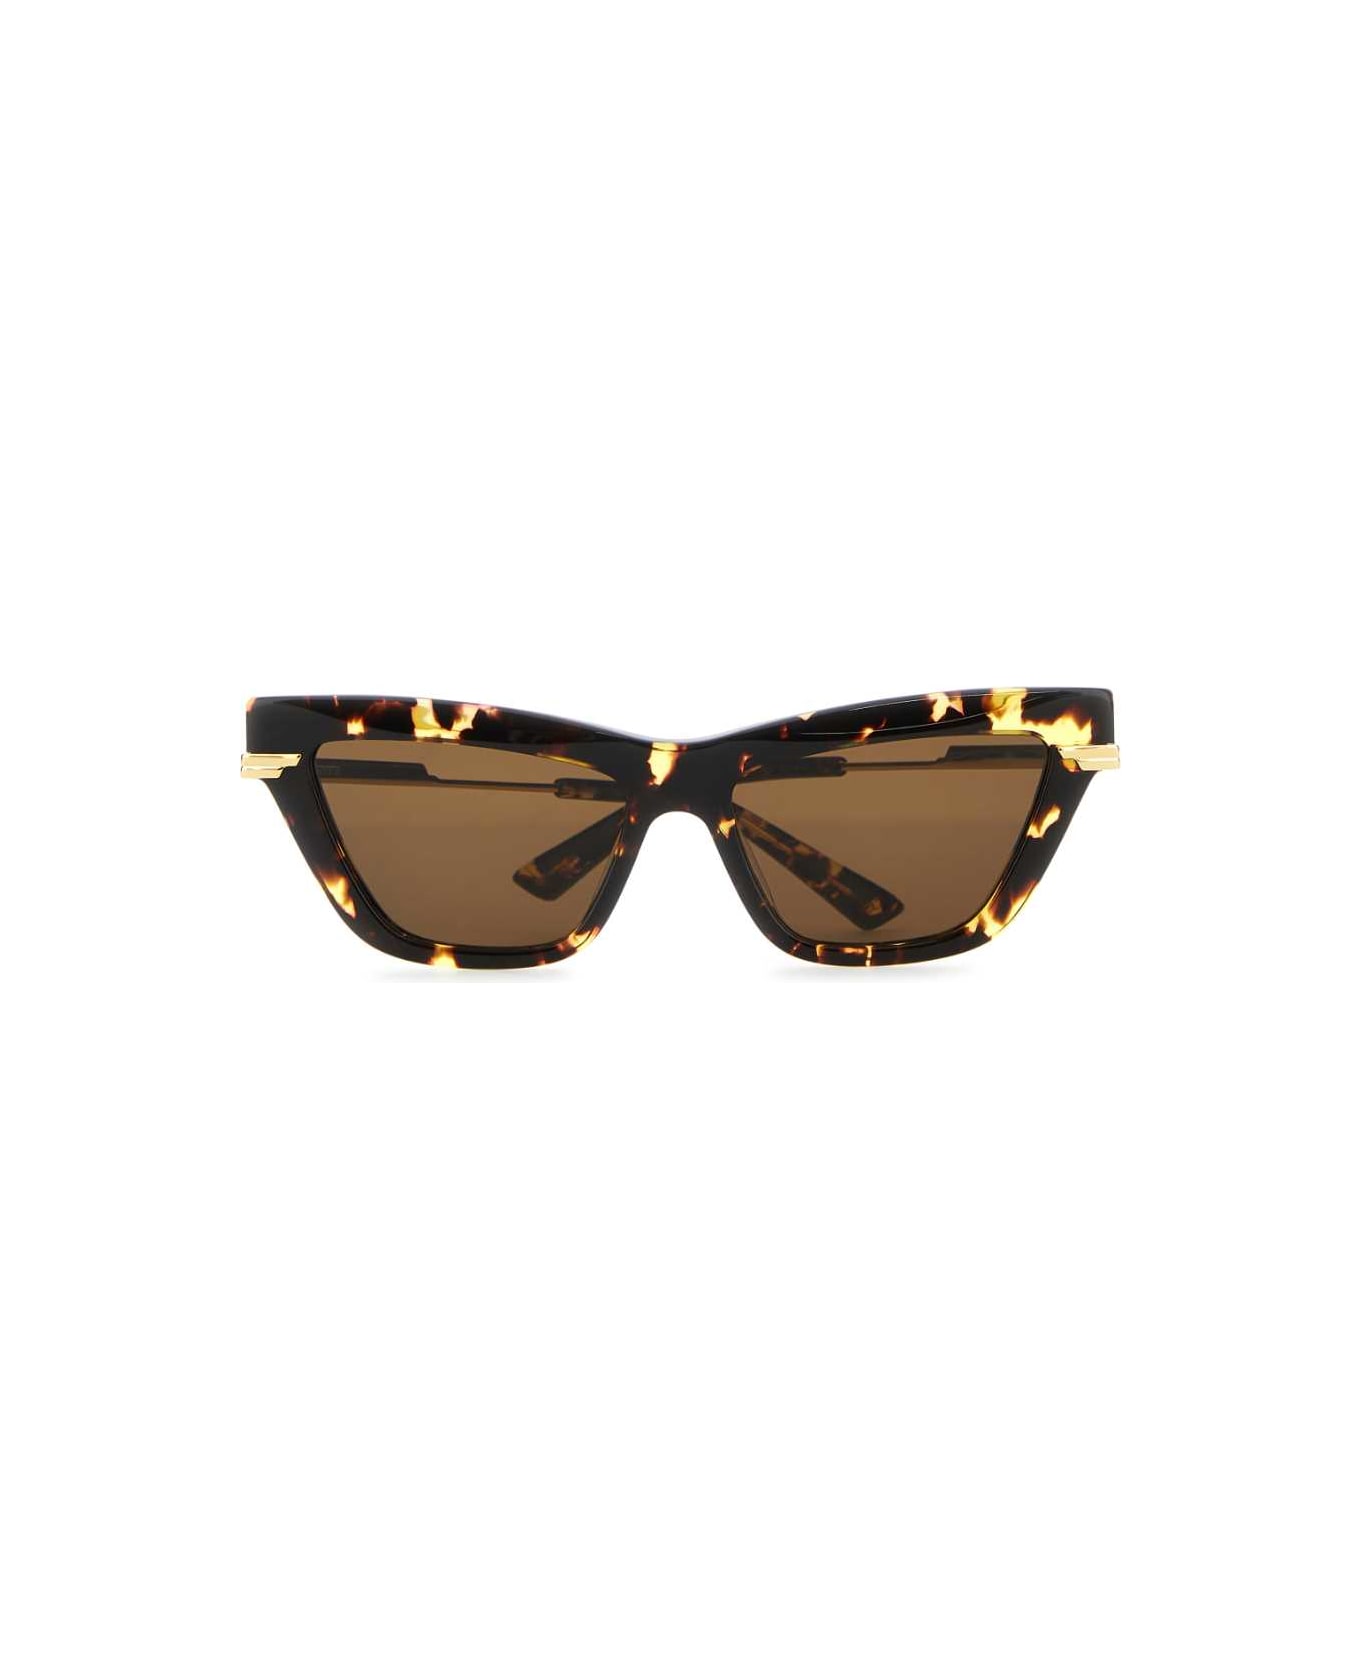 Bottega Veneta Printed Acetate Sunglasses - HAVANAGOLDBROWN サングラス